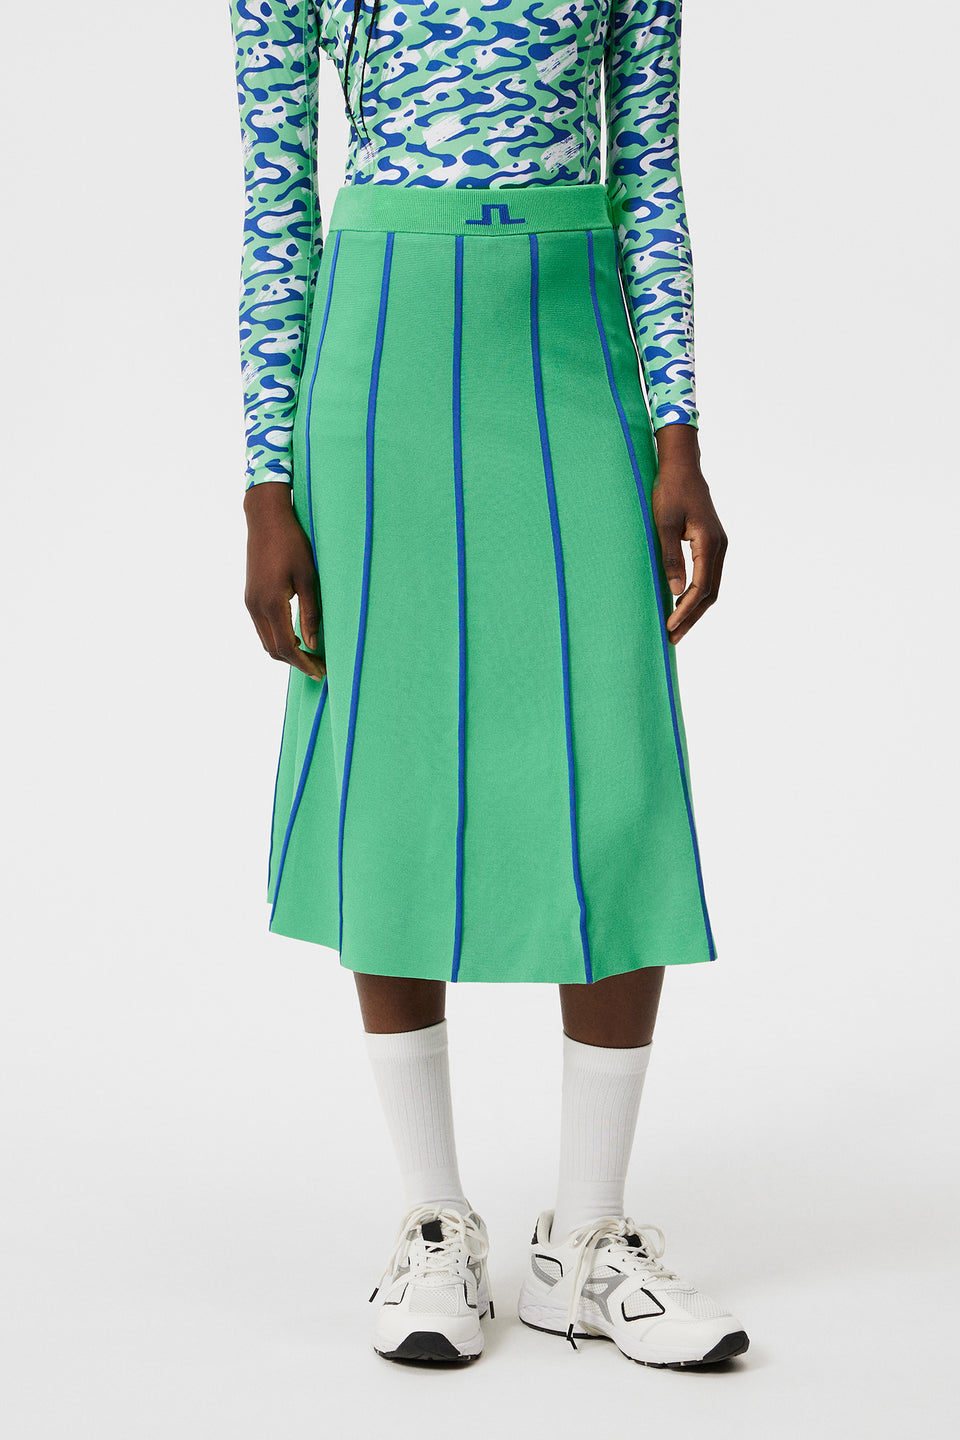 Sally Knitted Skirt / Jade Cream